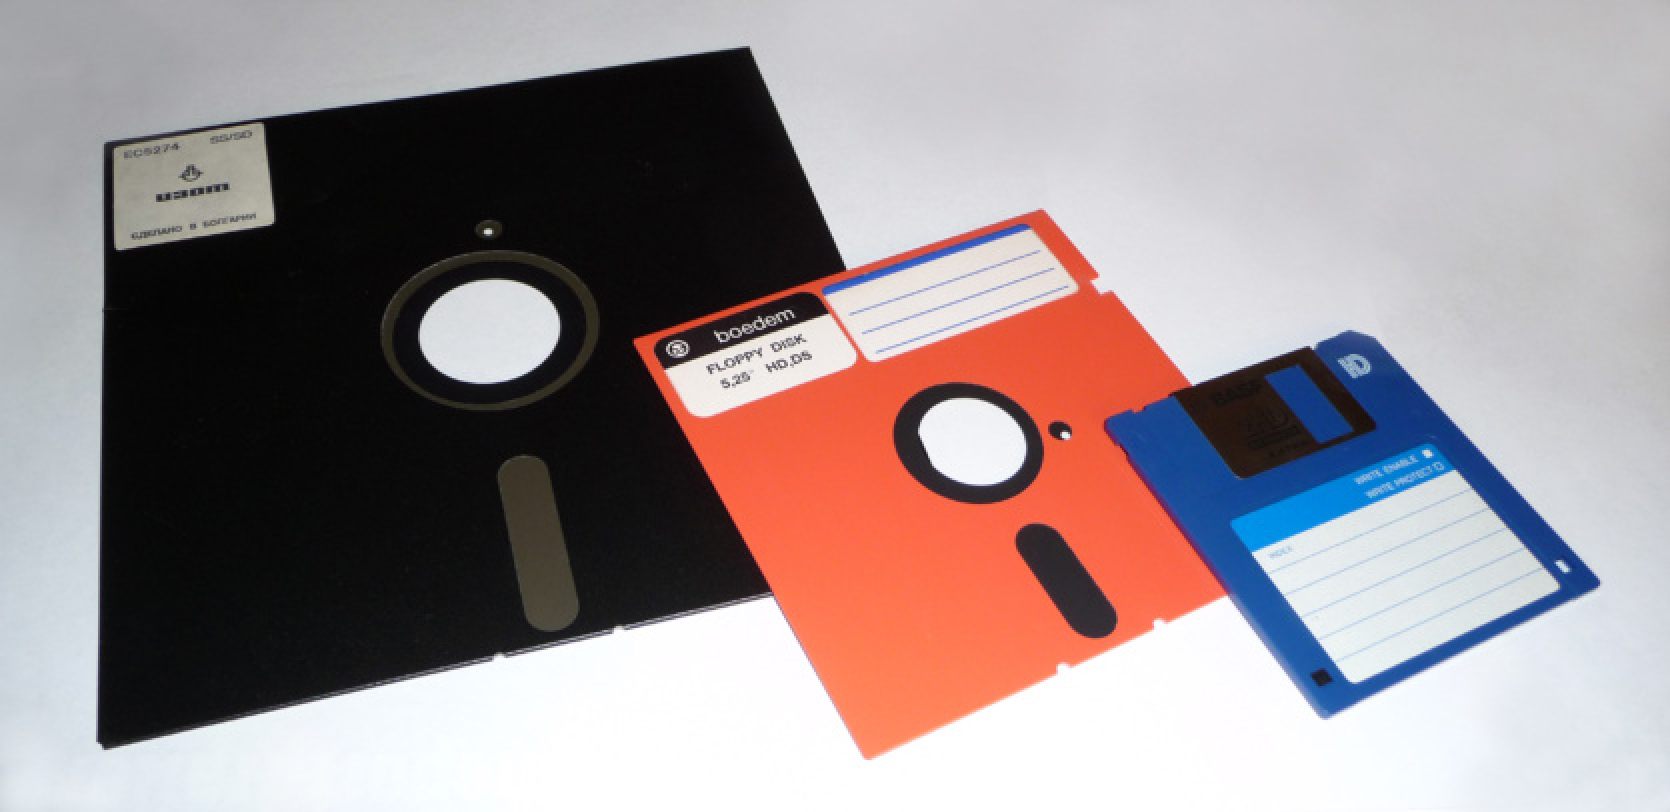 'We won the war on floppy disks': Japan repeals 1034 rules mandating floppy disks